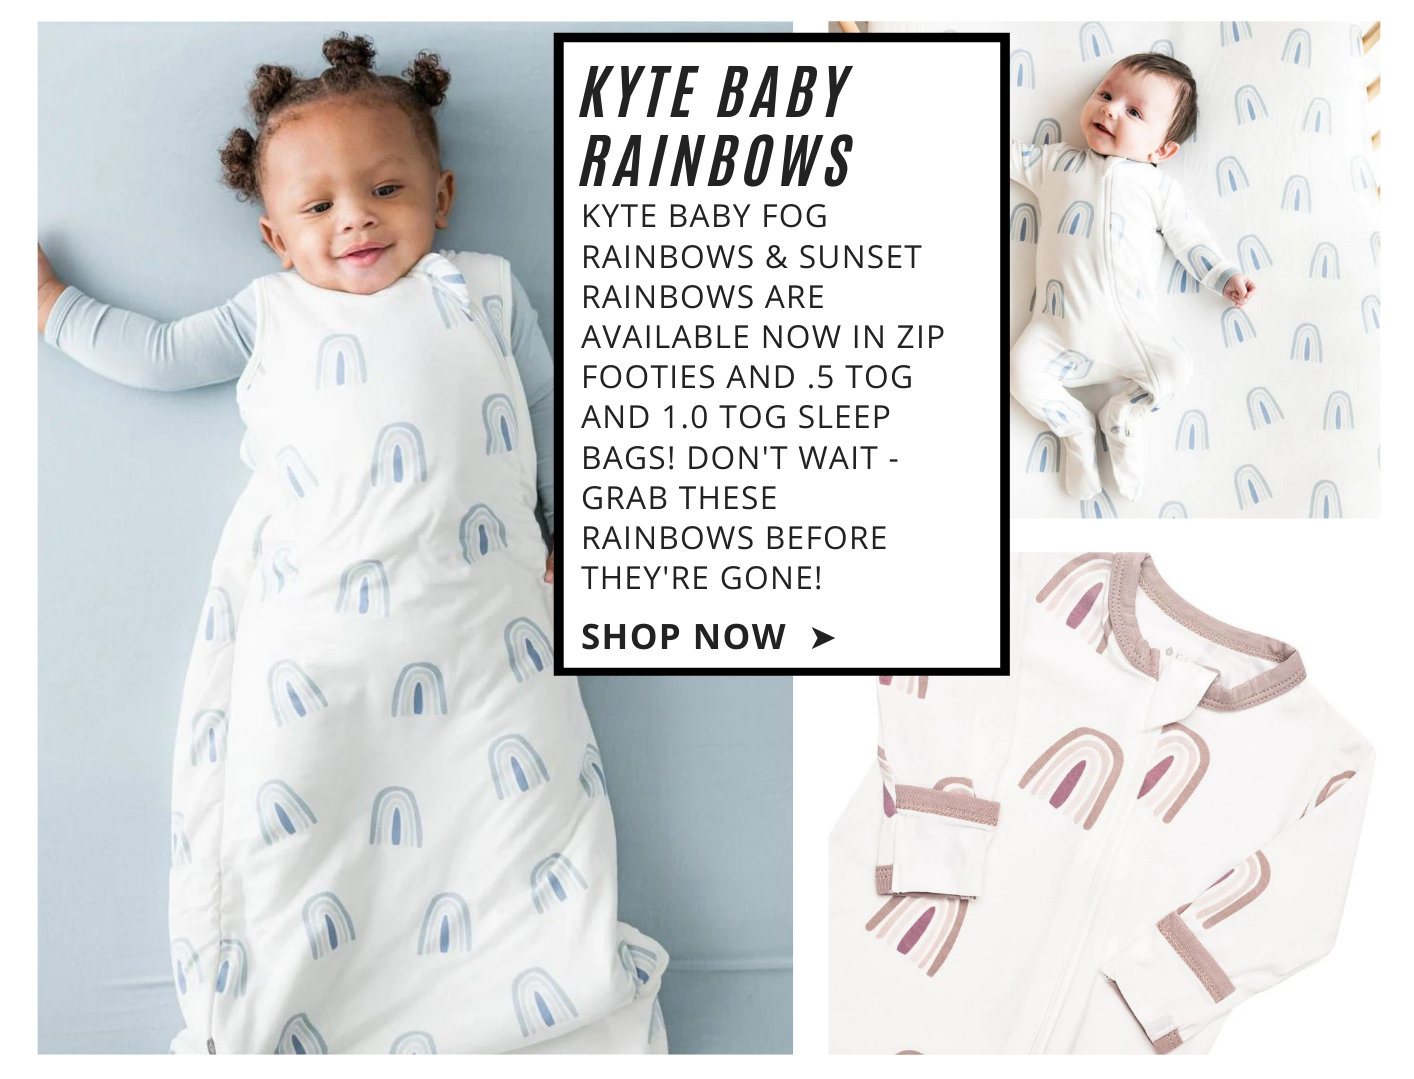 kyte baby rainbows